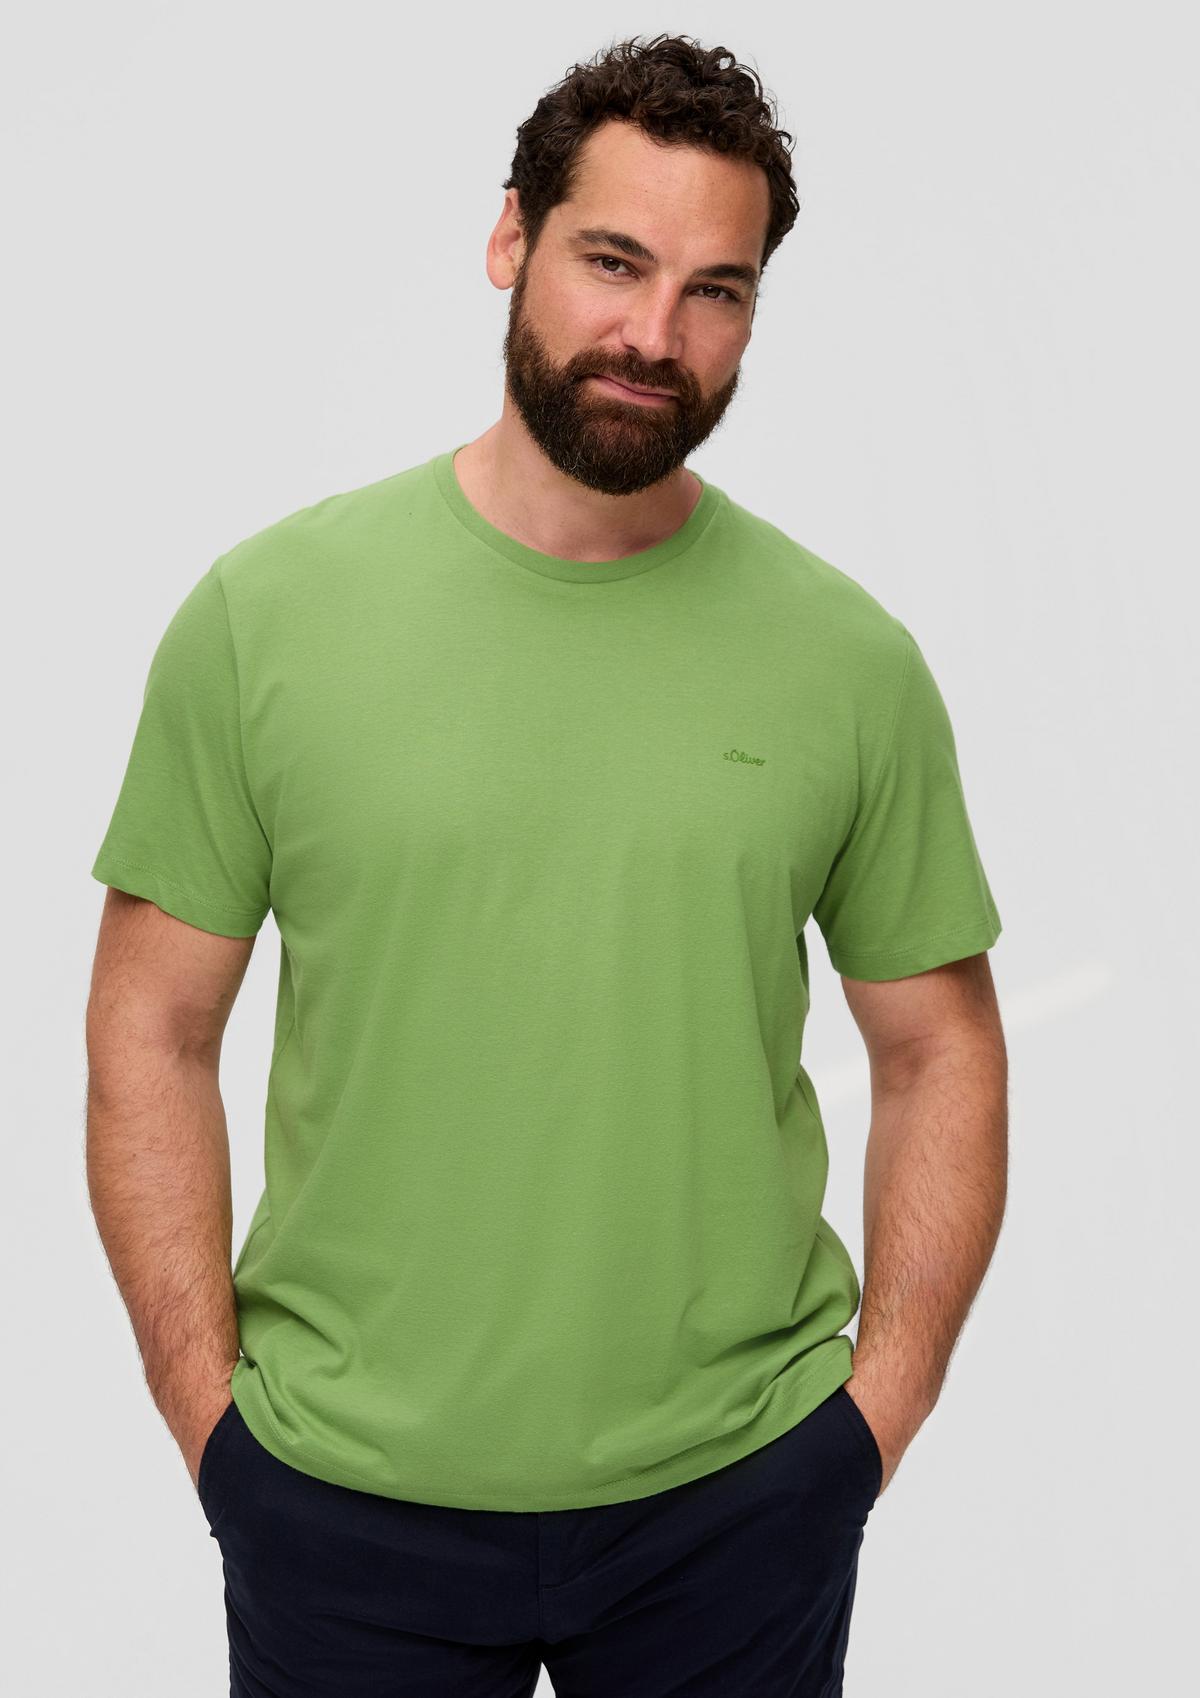 Men T-Shirts for Plain